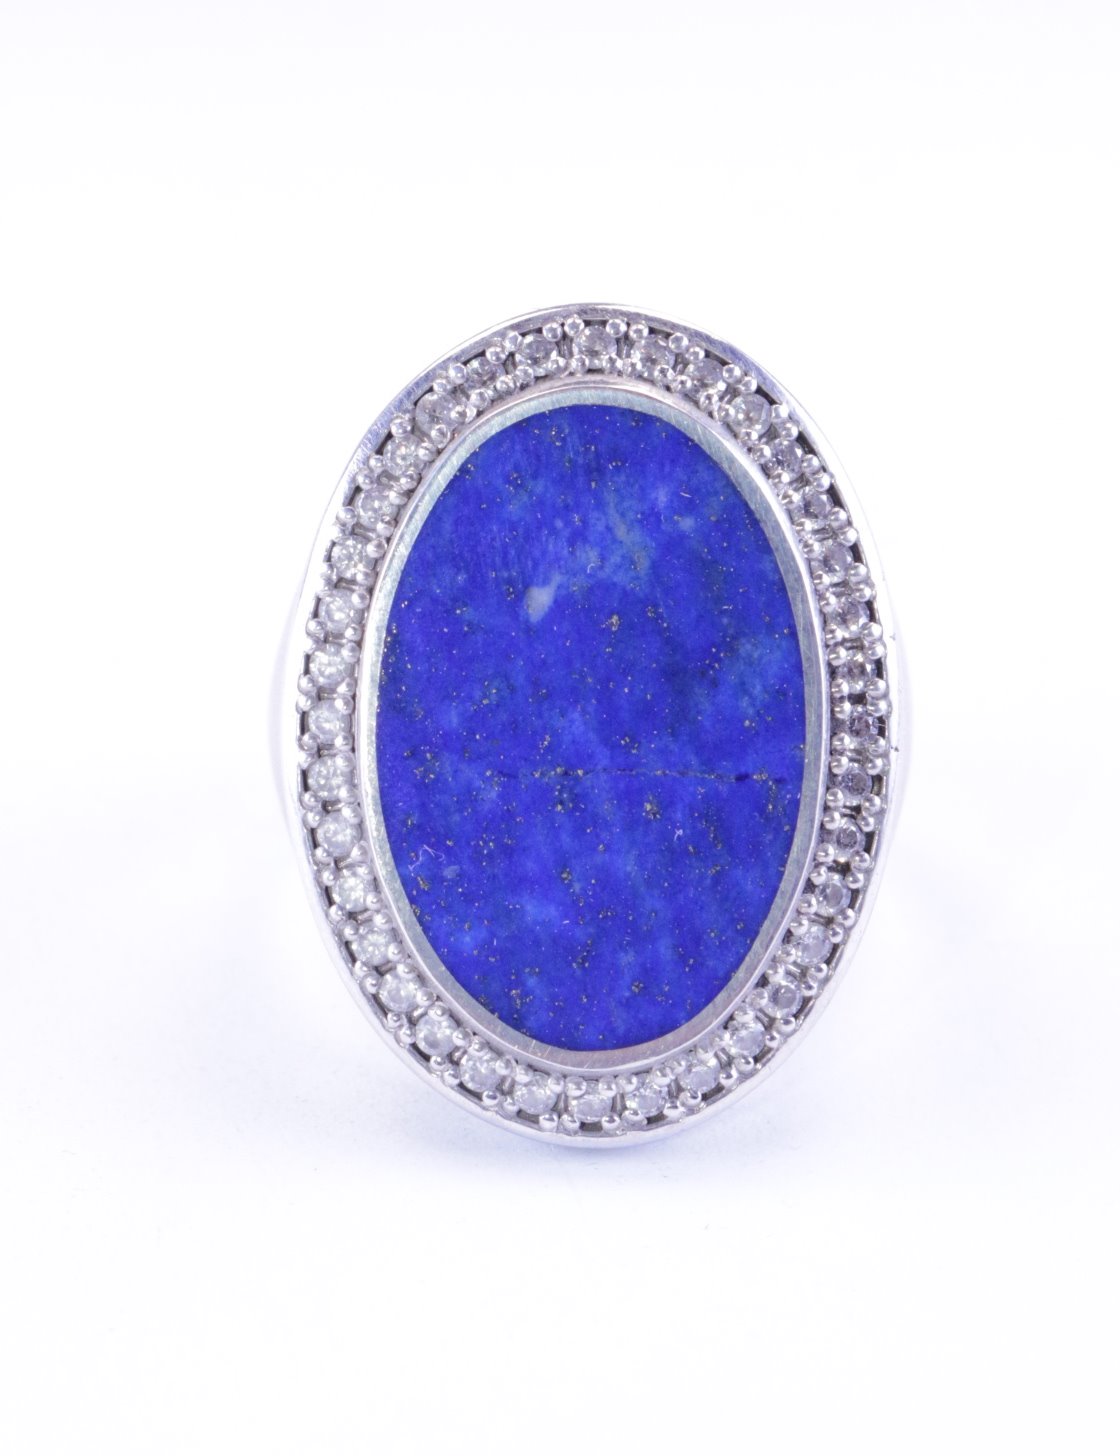 .. - Prsten, stříbro 925/1000 s afghánským Lapis lazuli, hrubá hmotnost 13,73 g